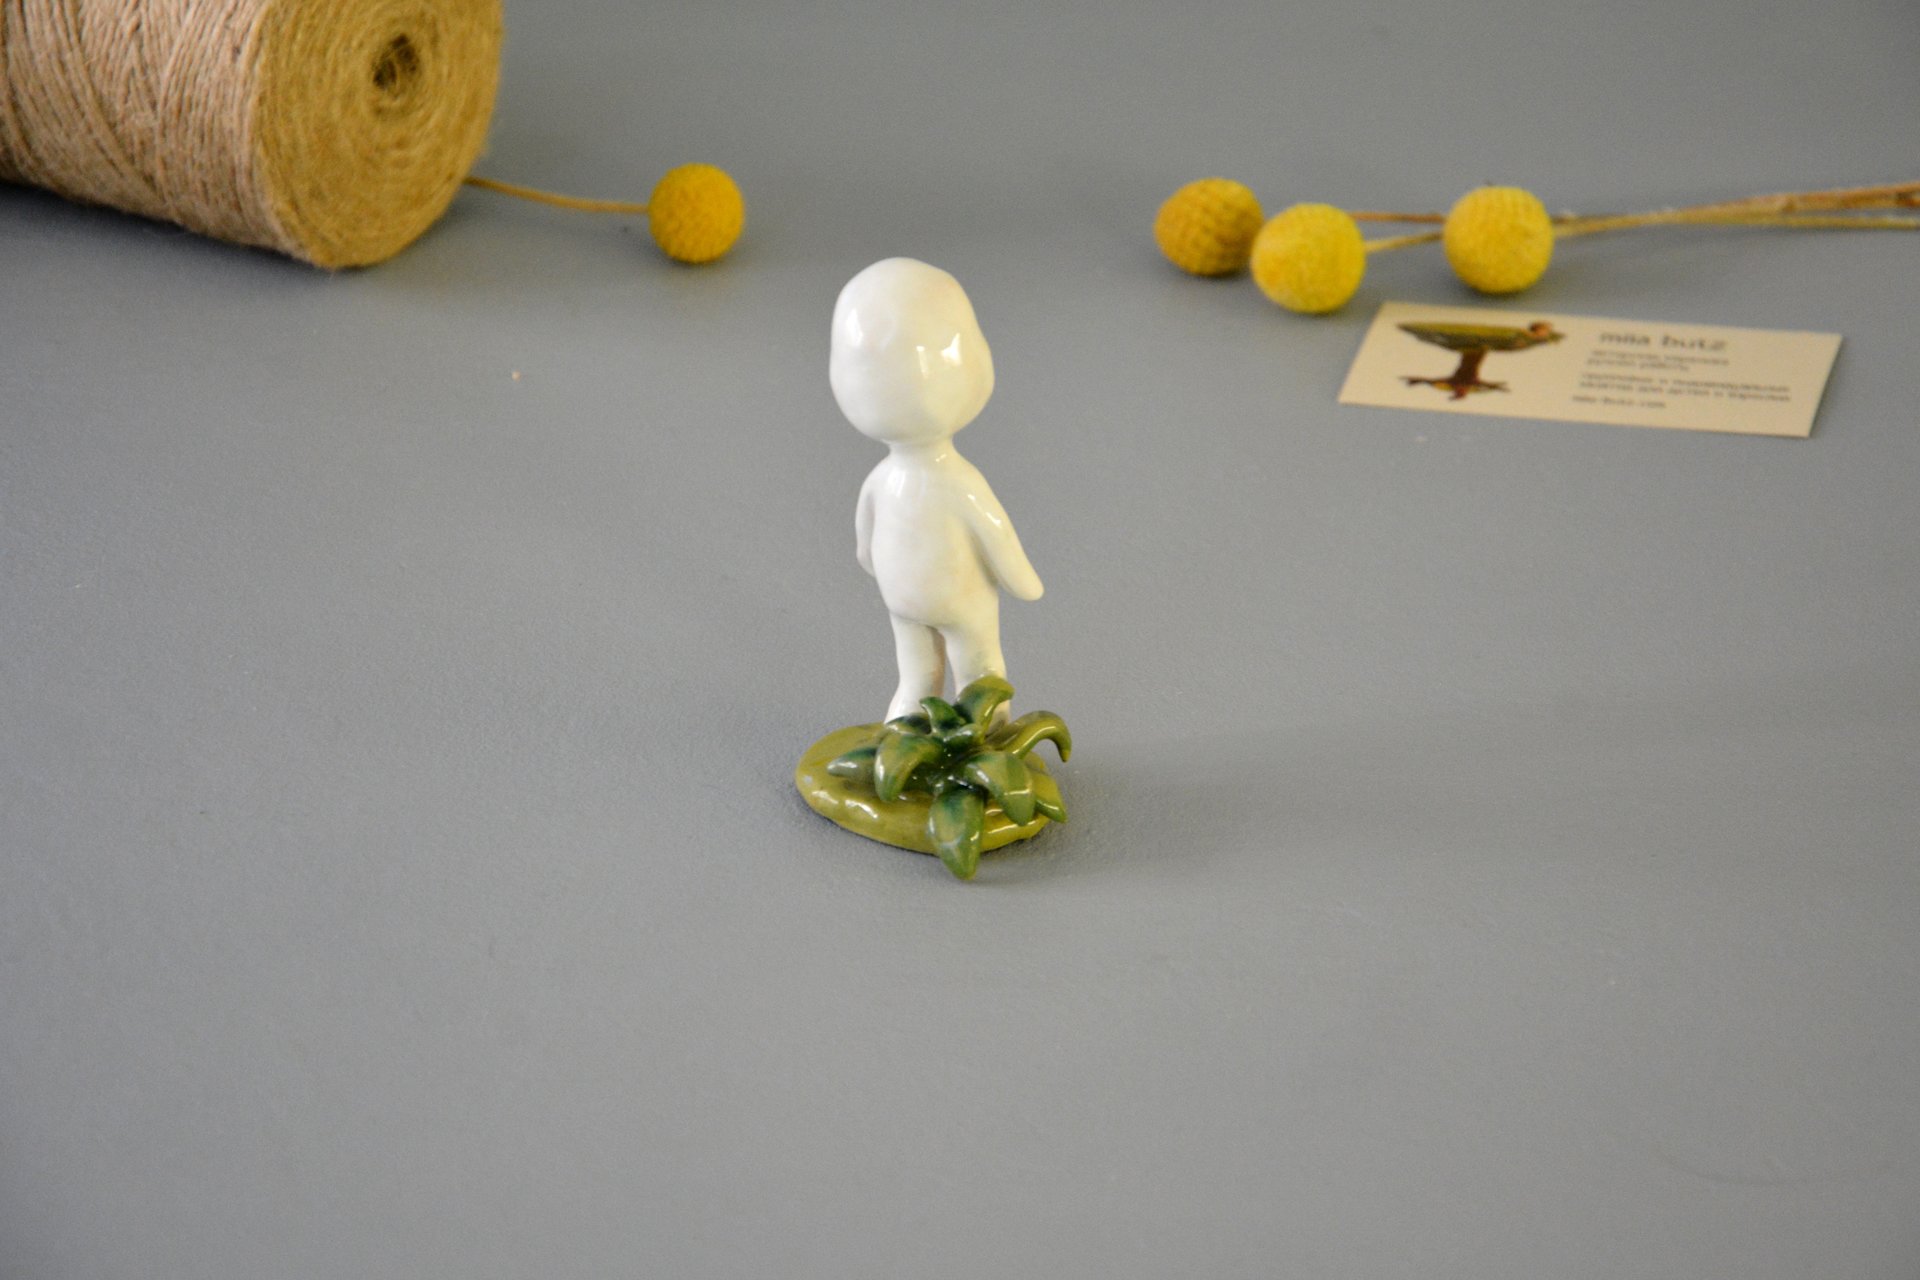 A figurine of a smiling Kodama tree spirit, height - 9.5 cm, photo 5 of 7.